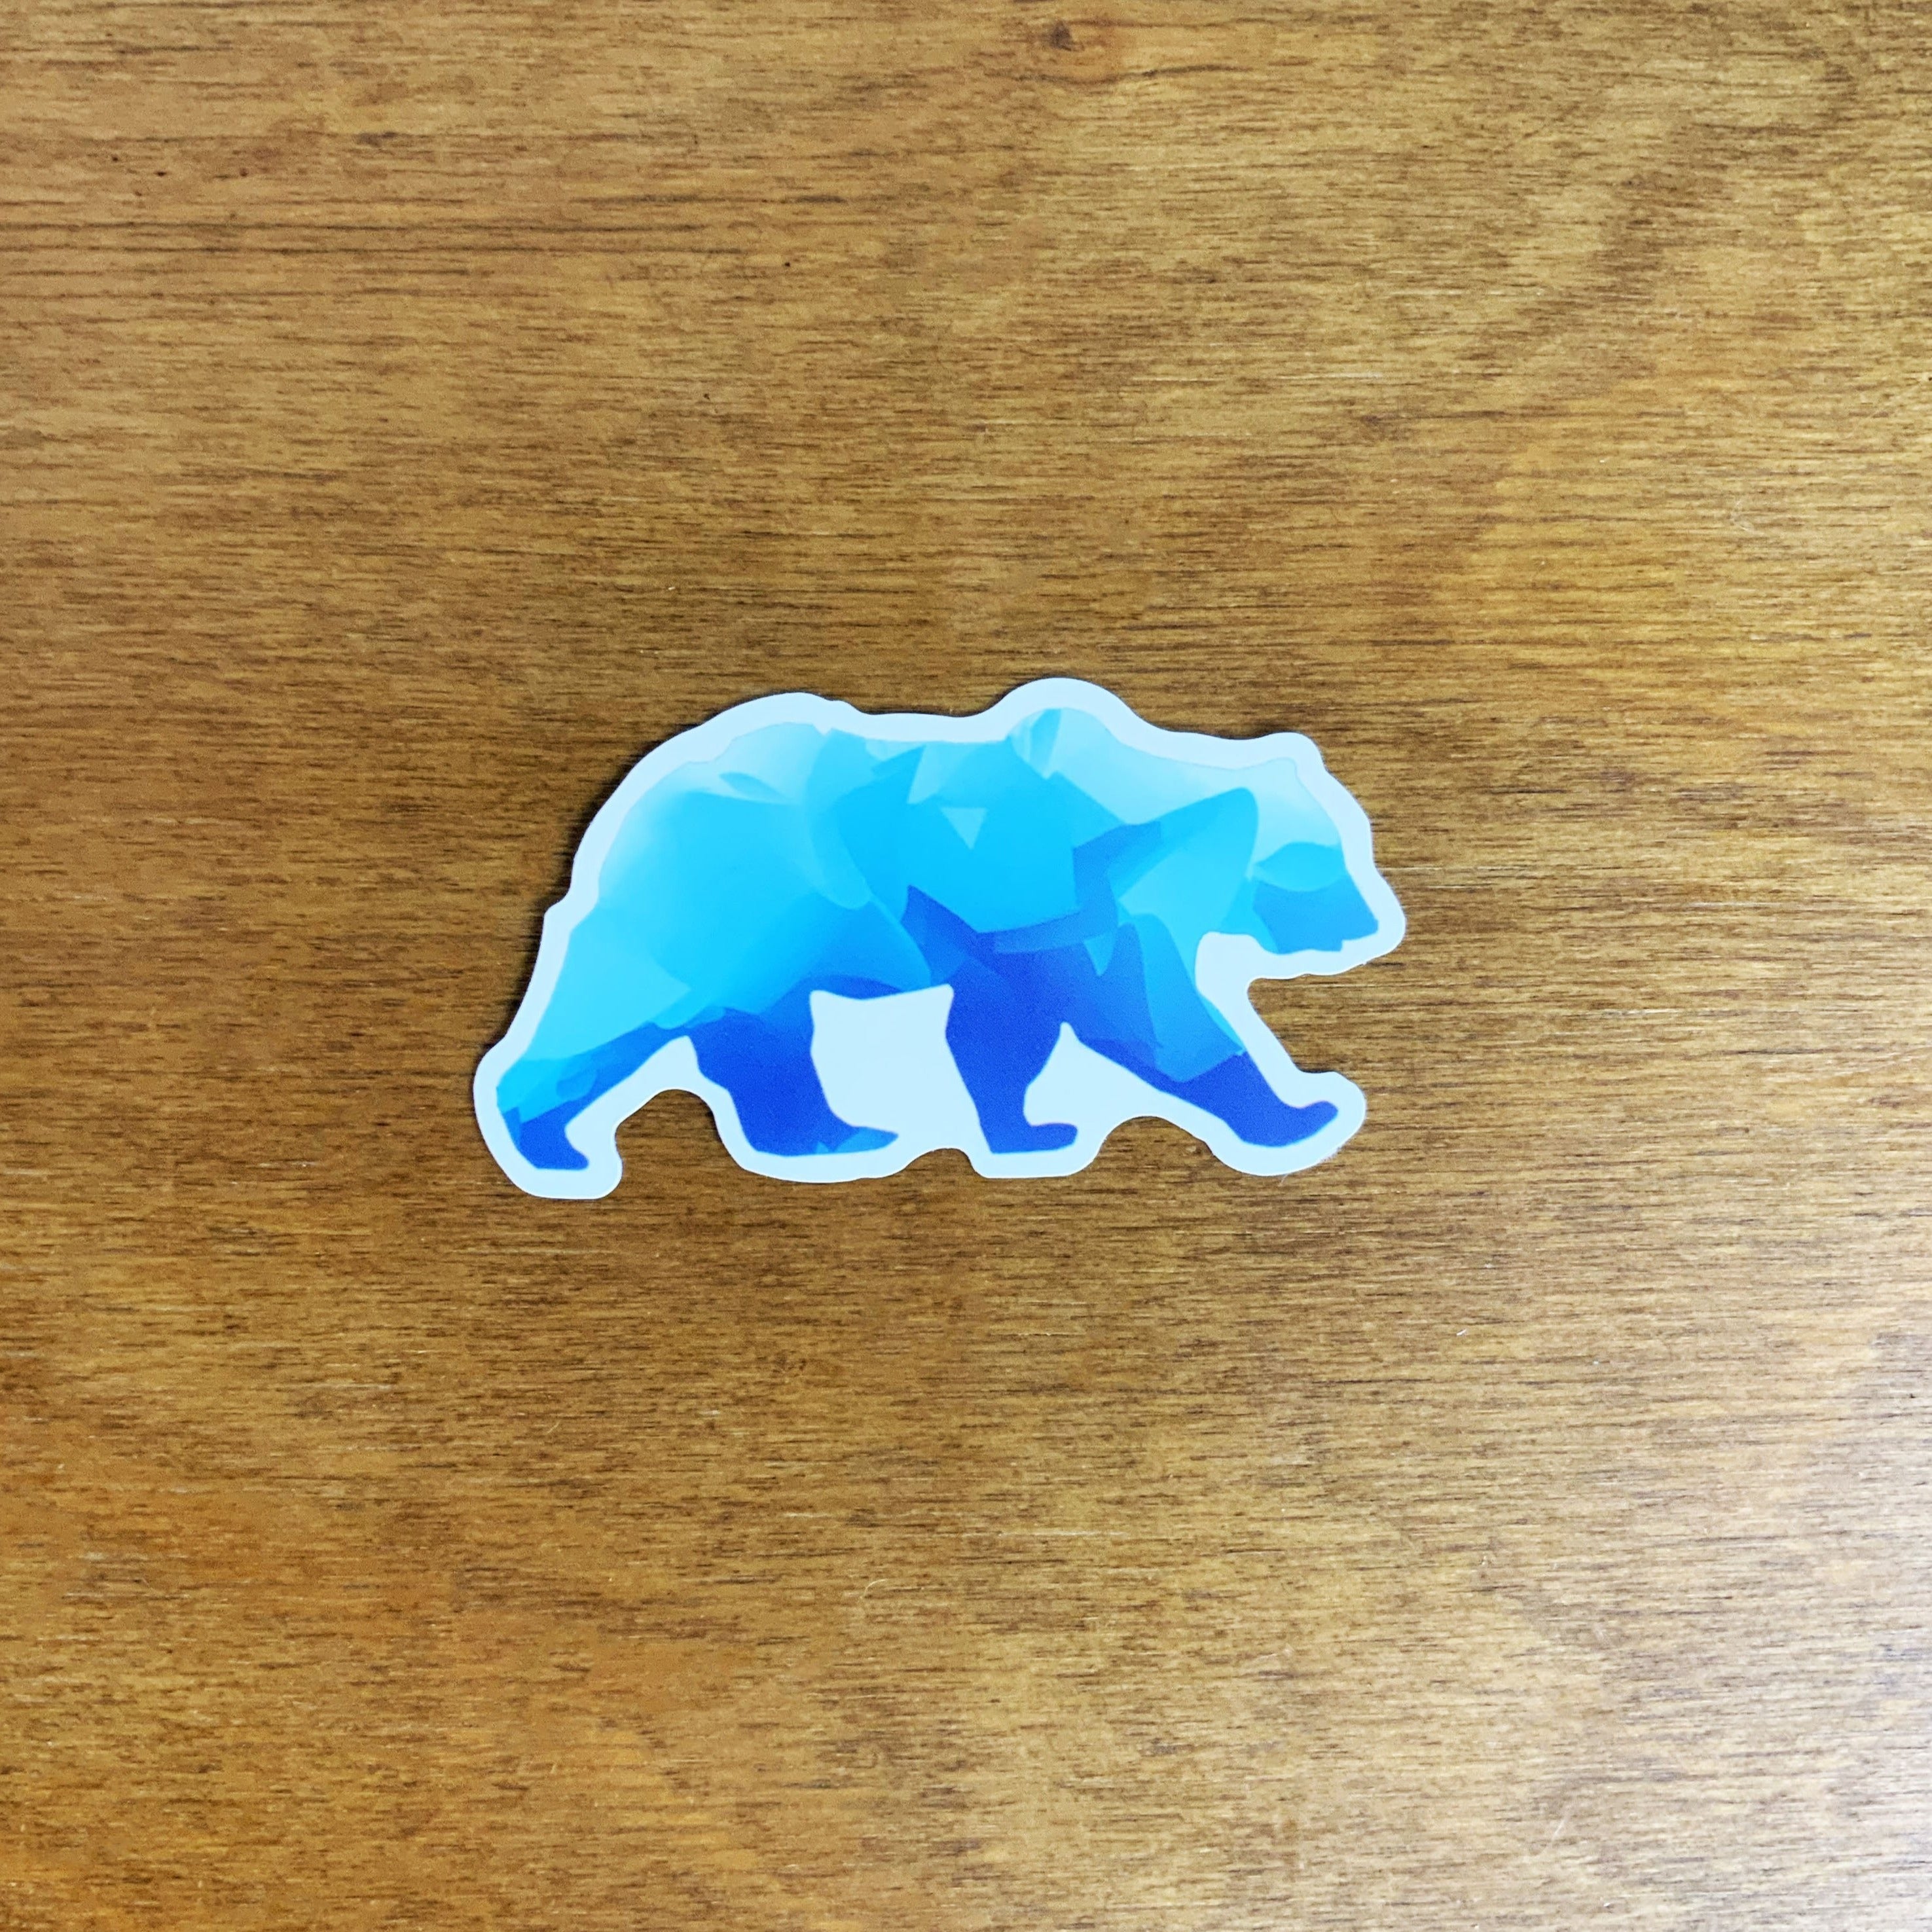 Blue Bear Sticker, sticker, Pacific Rayne, Defiance Outdoor Gear Co.